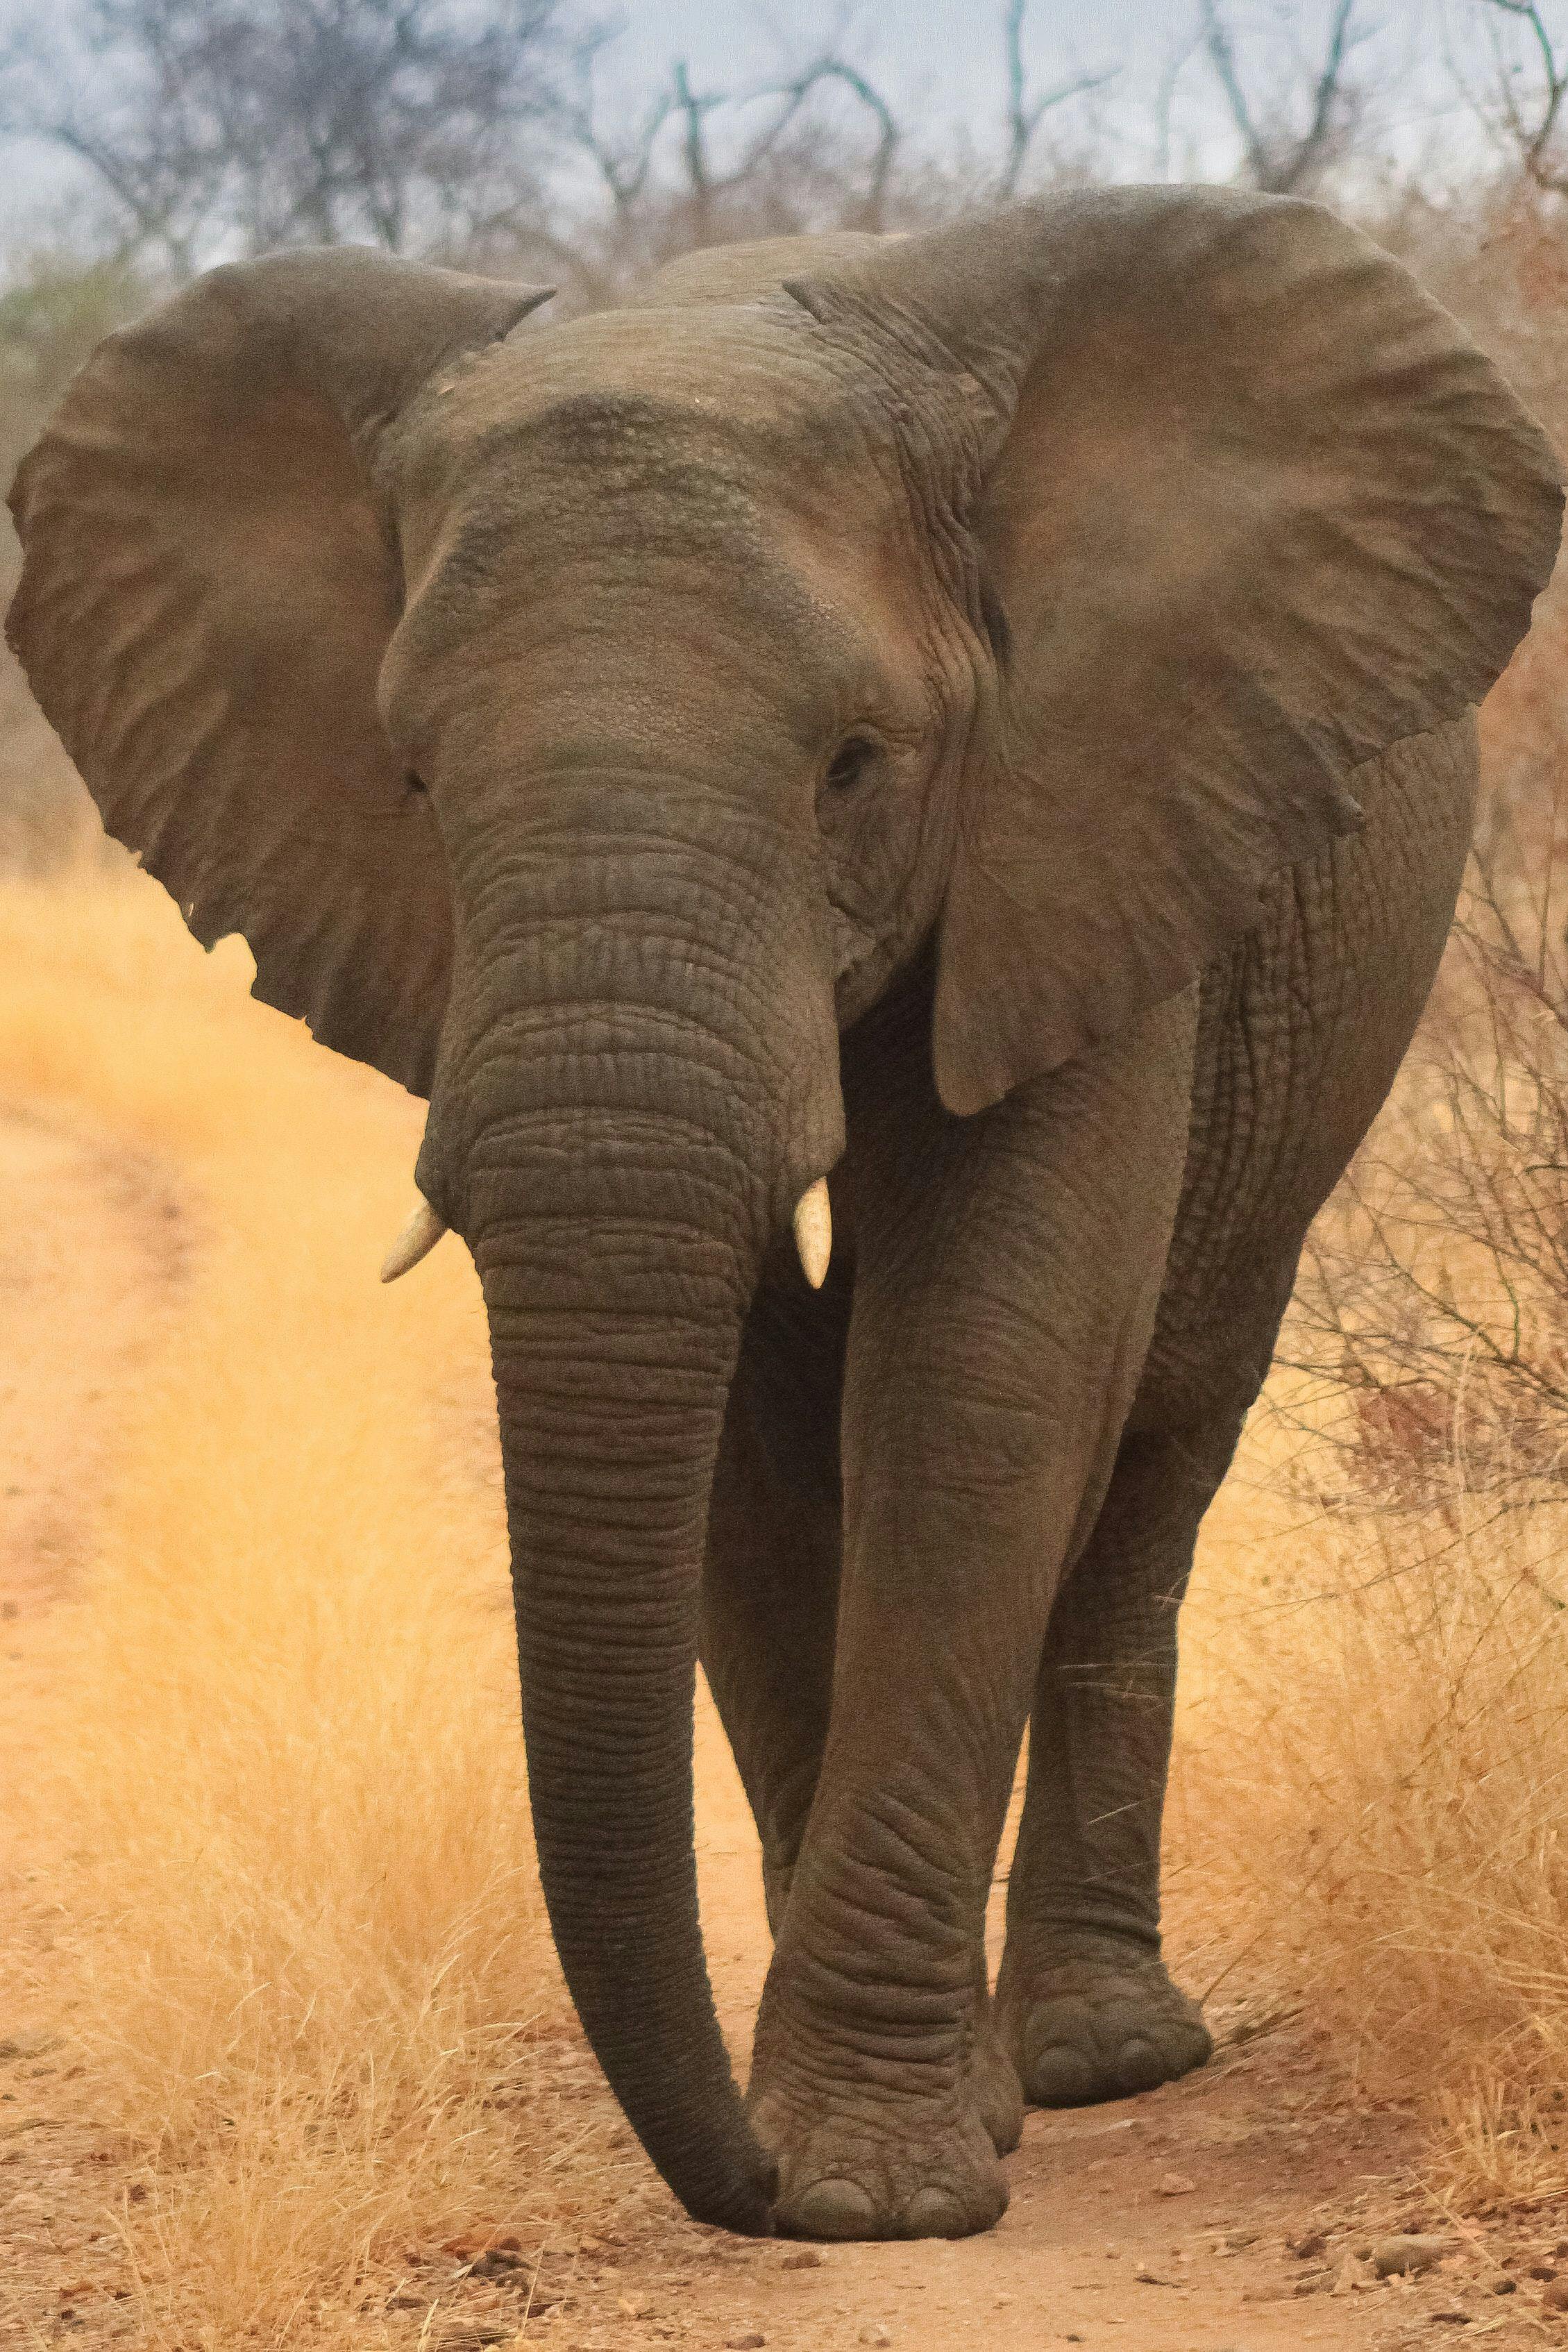 Elephant in Kruger National Park in South Africa.